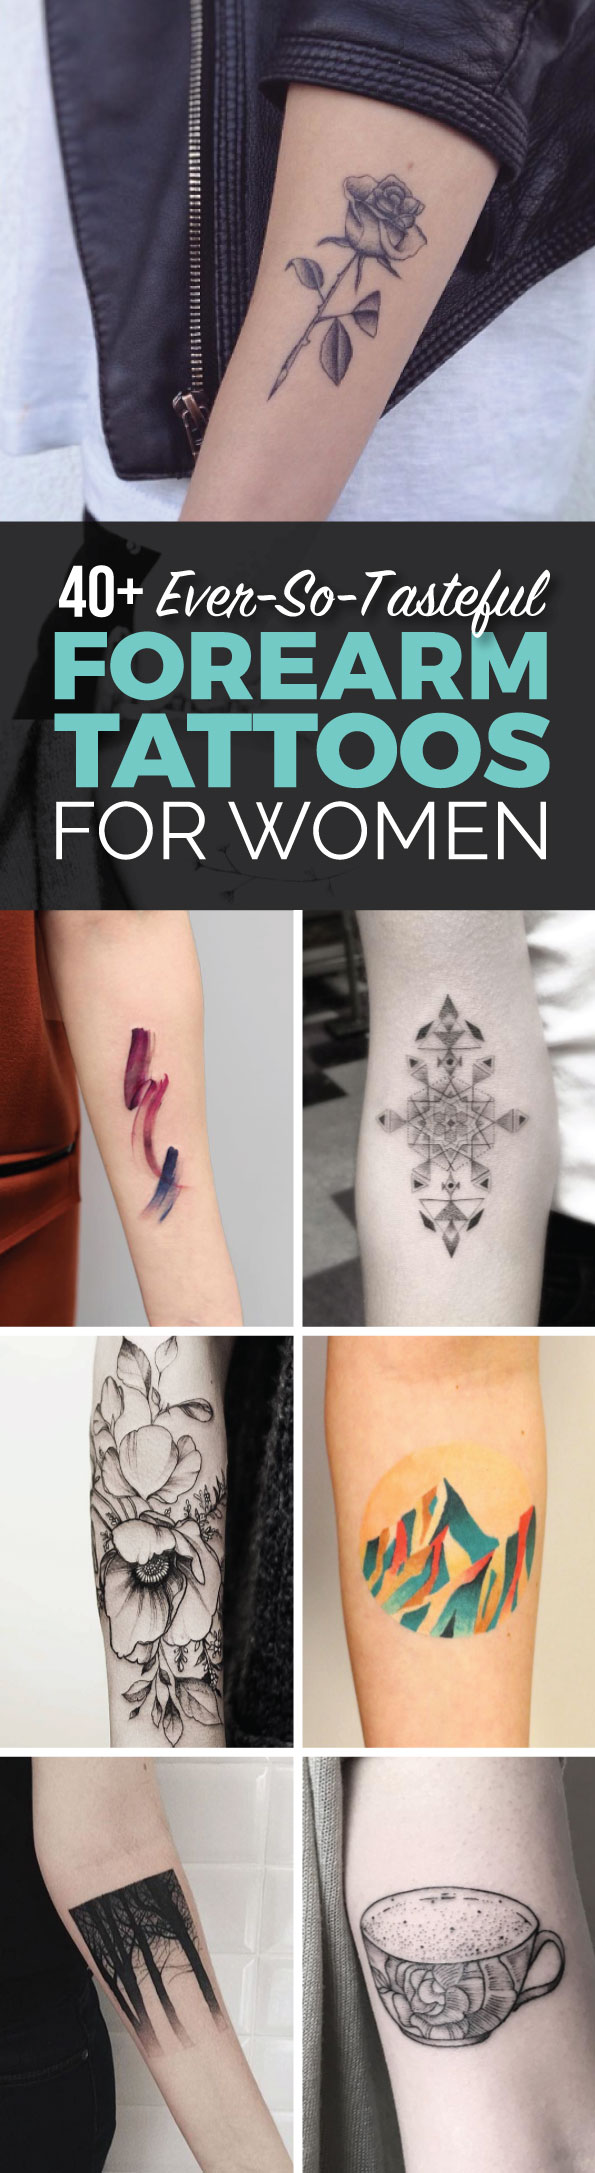 40+ Ever-So-Tasteful Forearm Tattoos for Women | TattooBlend